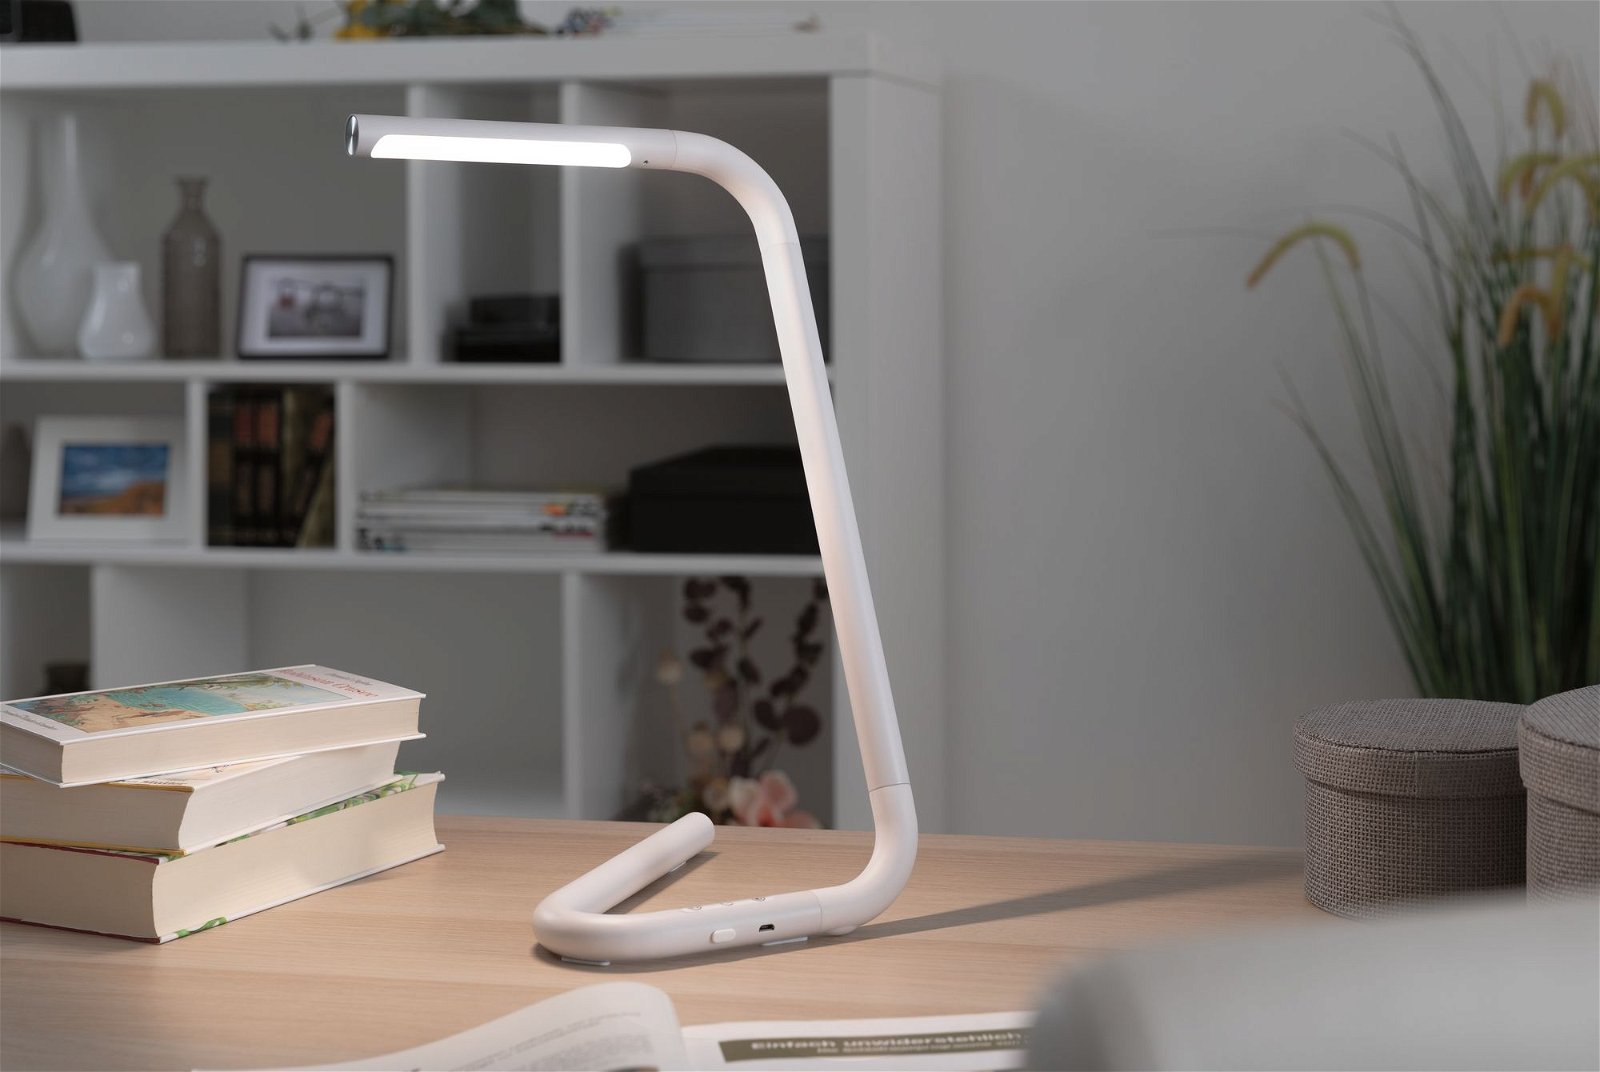 LED Desk luminaire FlexLink Tunable White 370lm 4,5W White